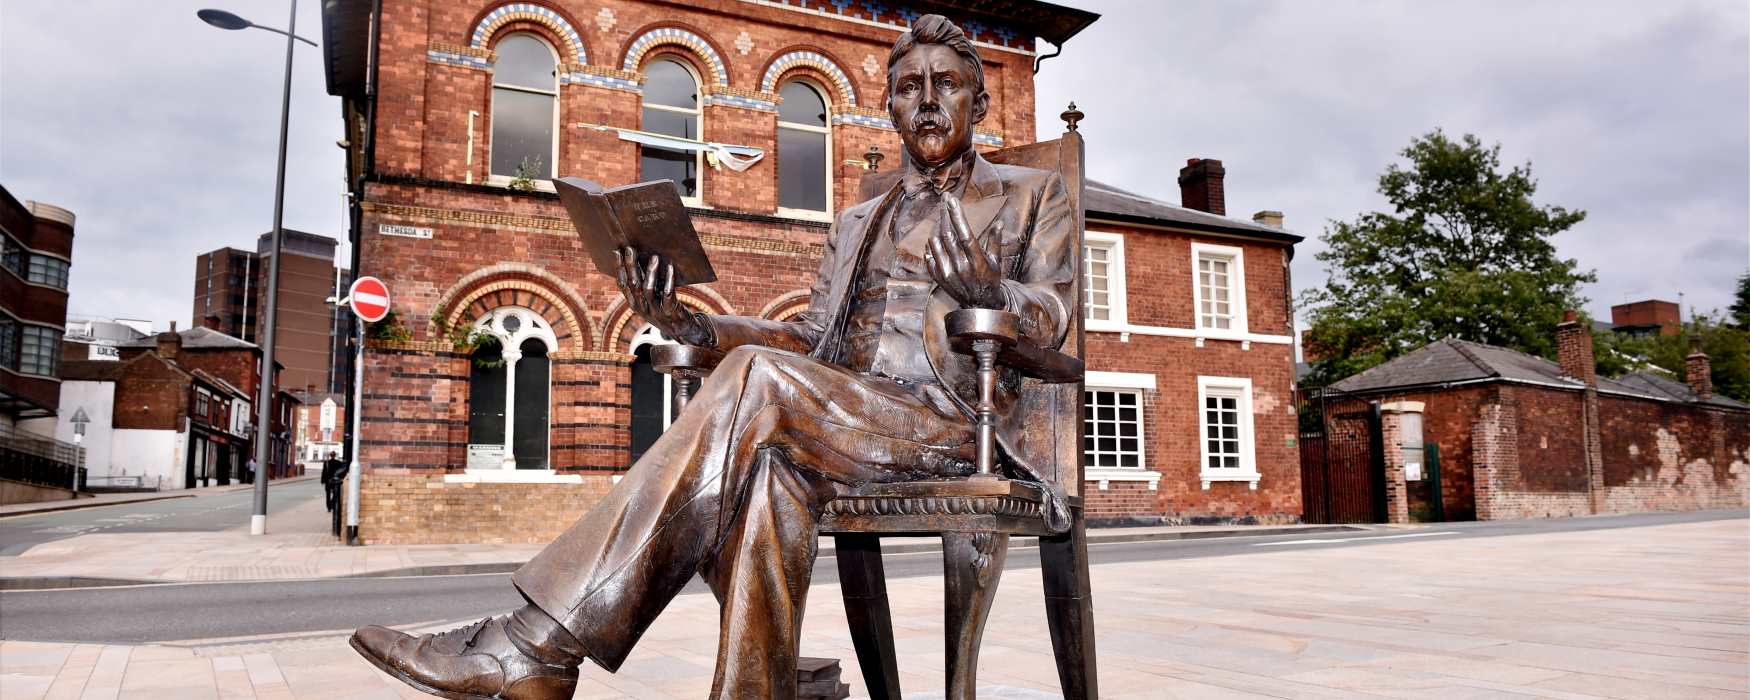 Arnold Bennett Statue Stoke-on-Trent Public Art Sculpture